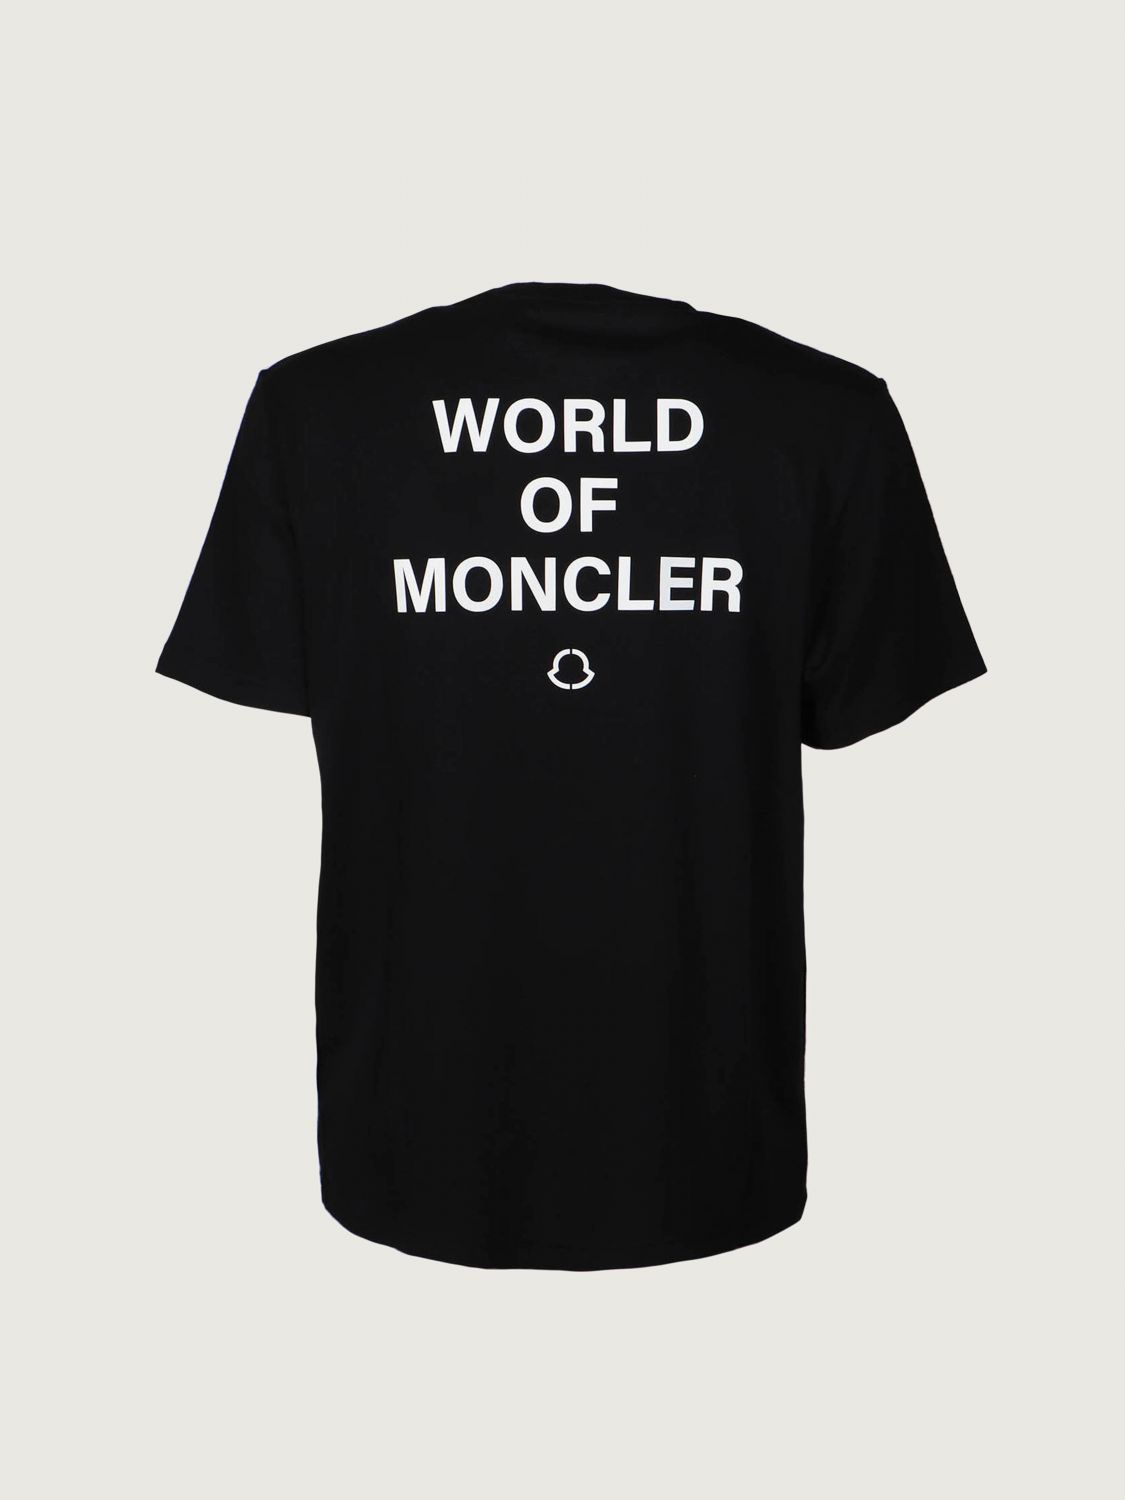 Moncler Genius Fragment T Shirt Men Moncler Genius 1952 T Shirt Moncler Genius Fragment Men 4051